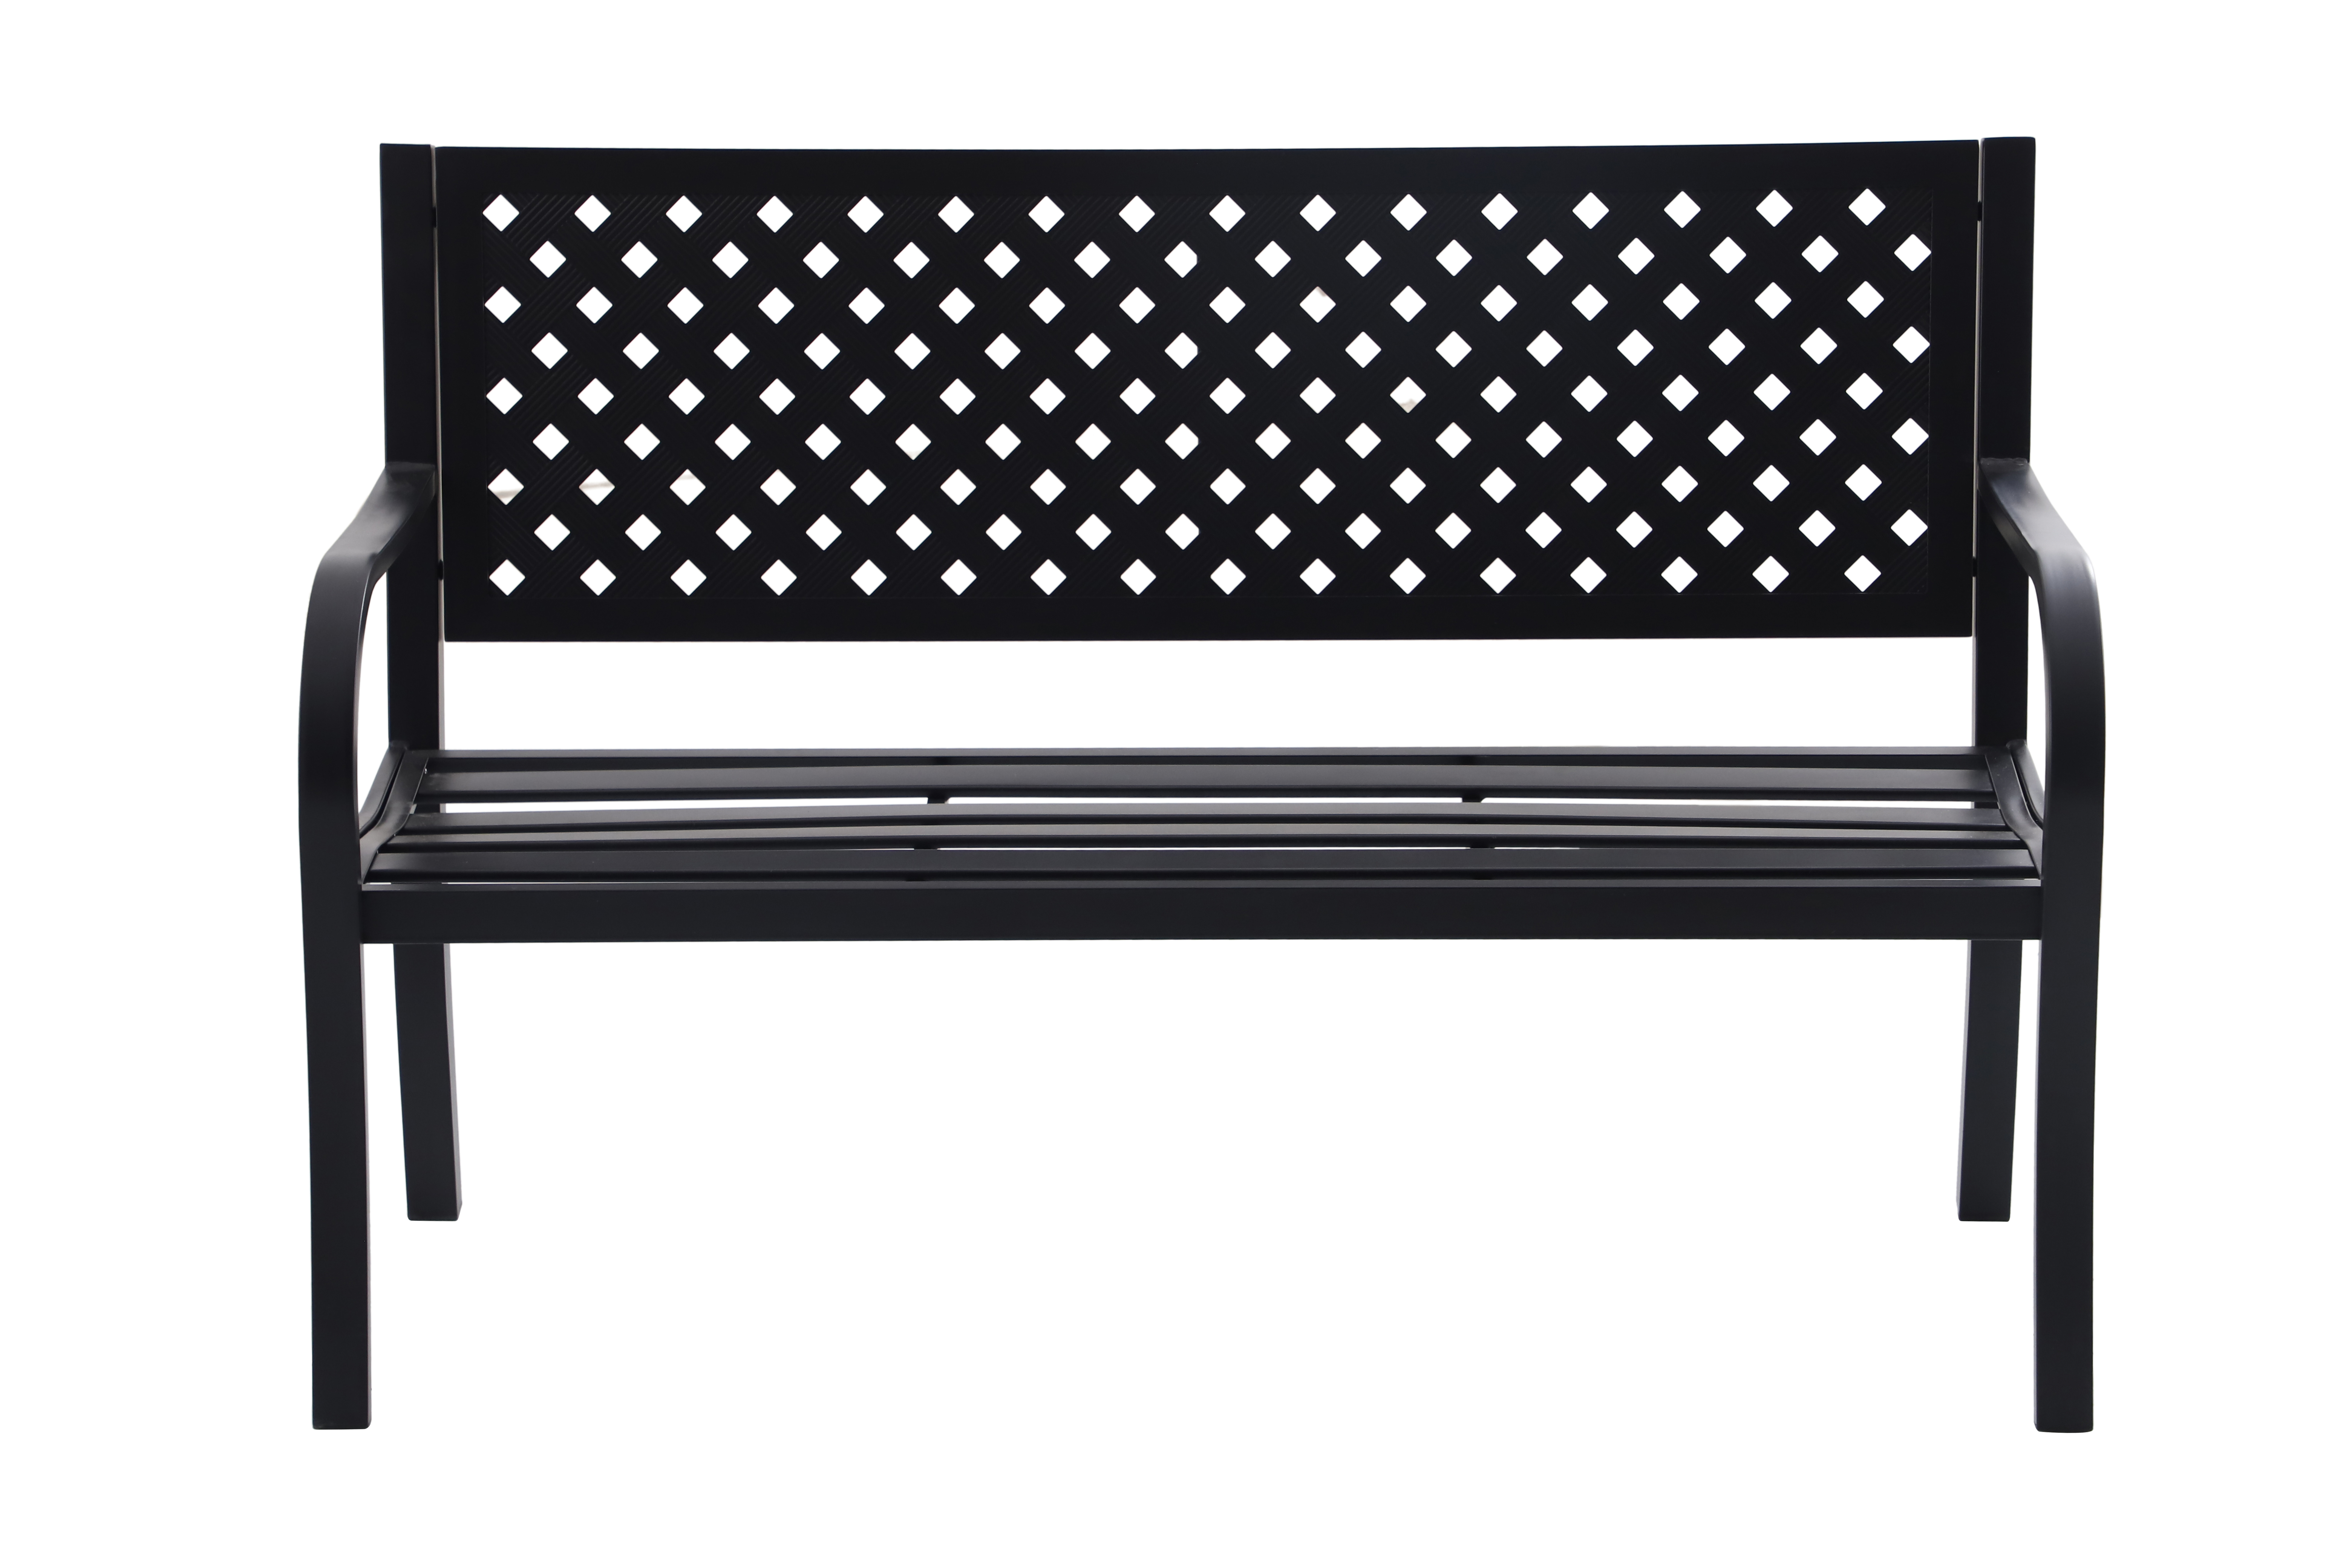 Mainstays Lattice High Back Slat Seat Steel Garden Bench, Black - image 3 of 12